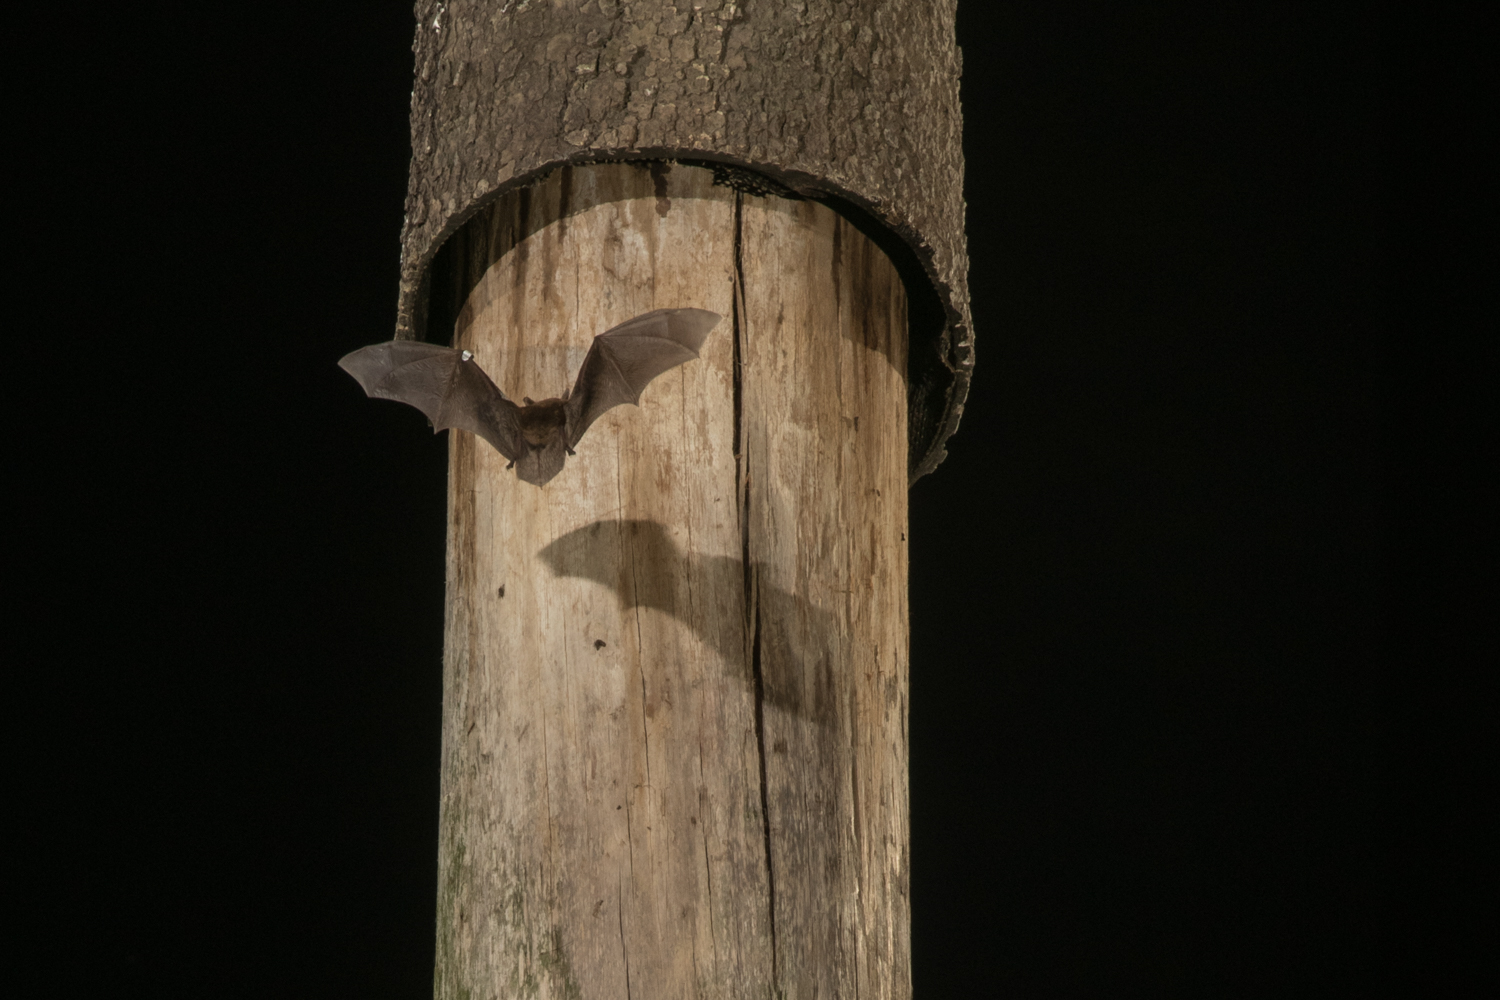 Brandenbark Artificial Bat Roost Nature Preserve